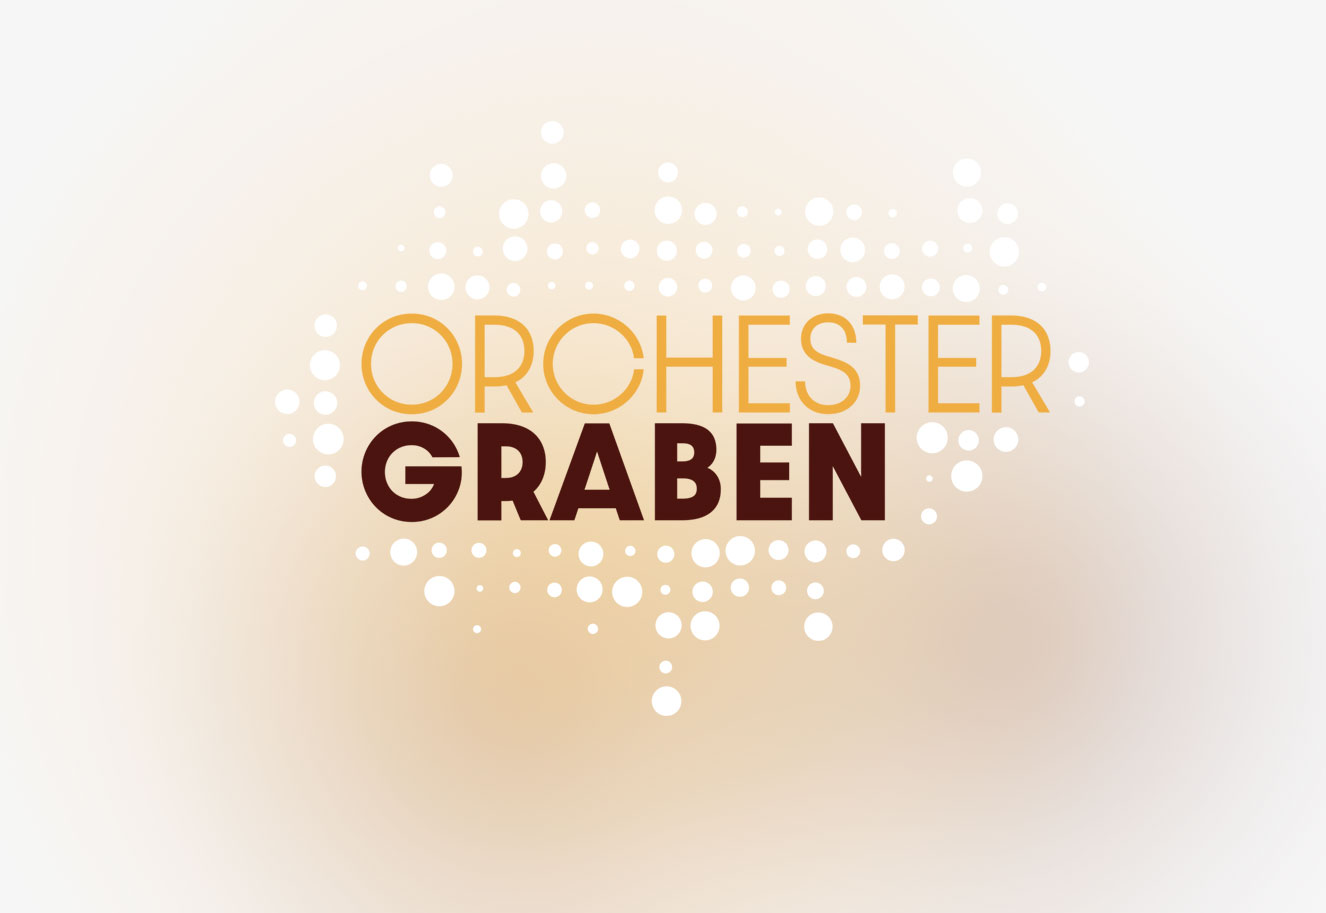 (c) Orchestergraben.com